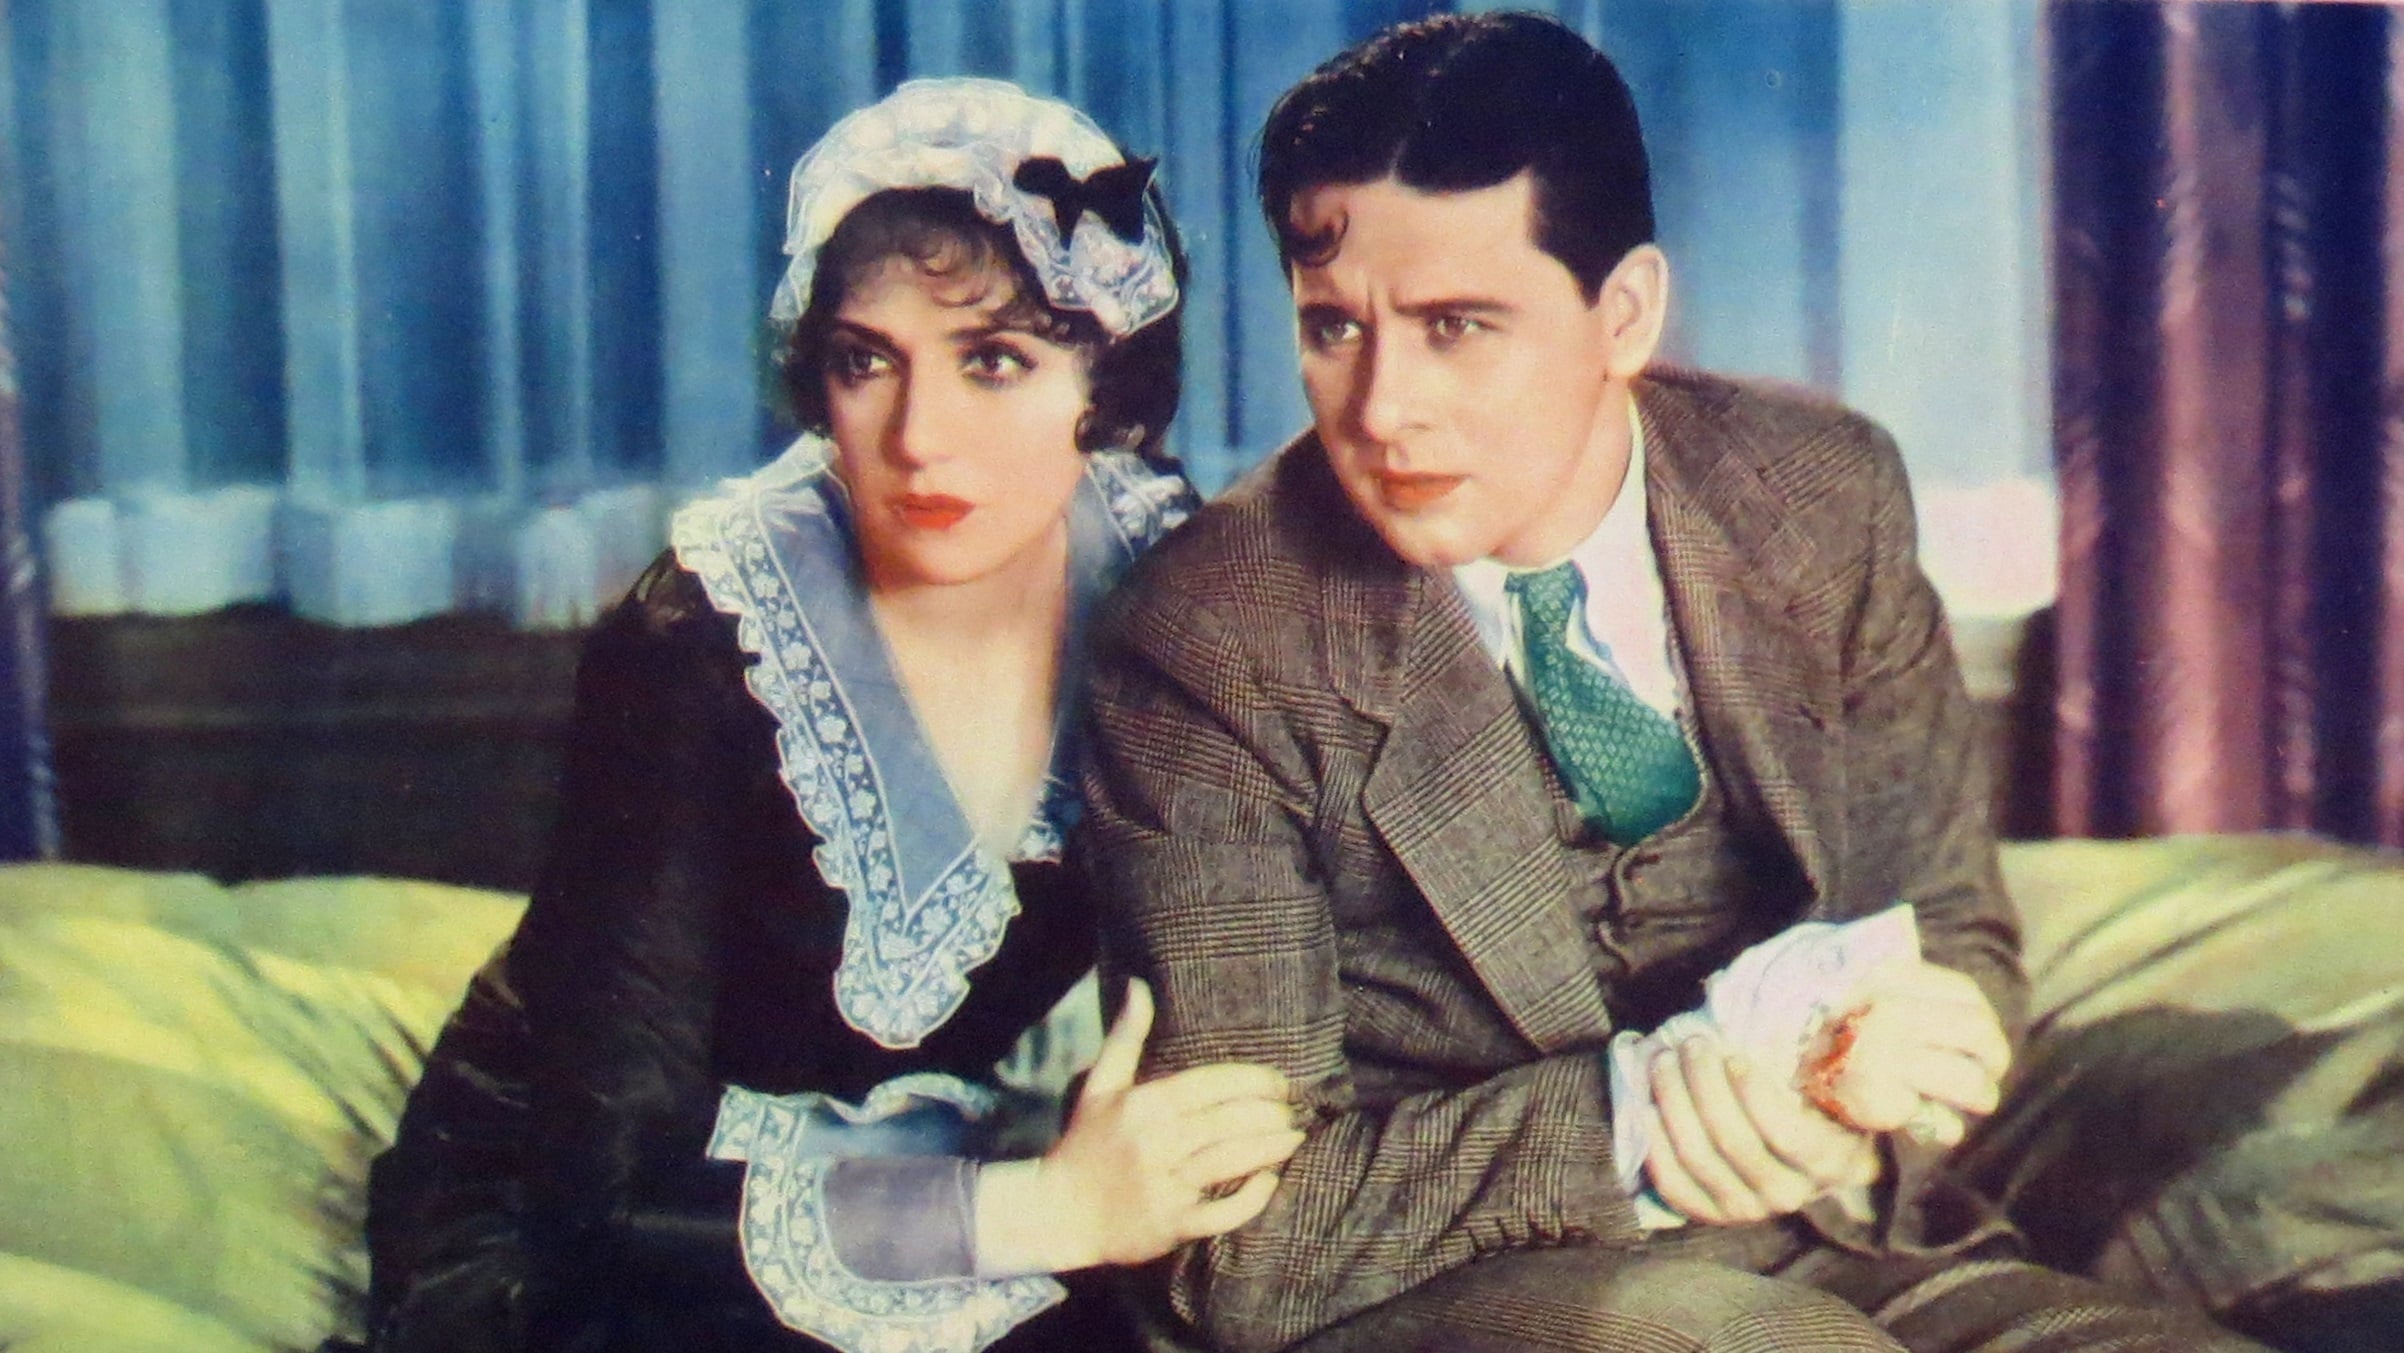 Alias French Gertie (1930)